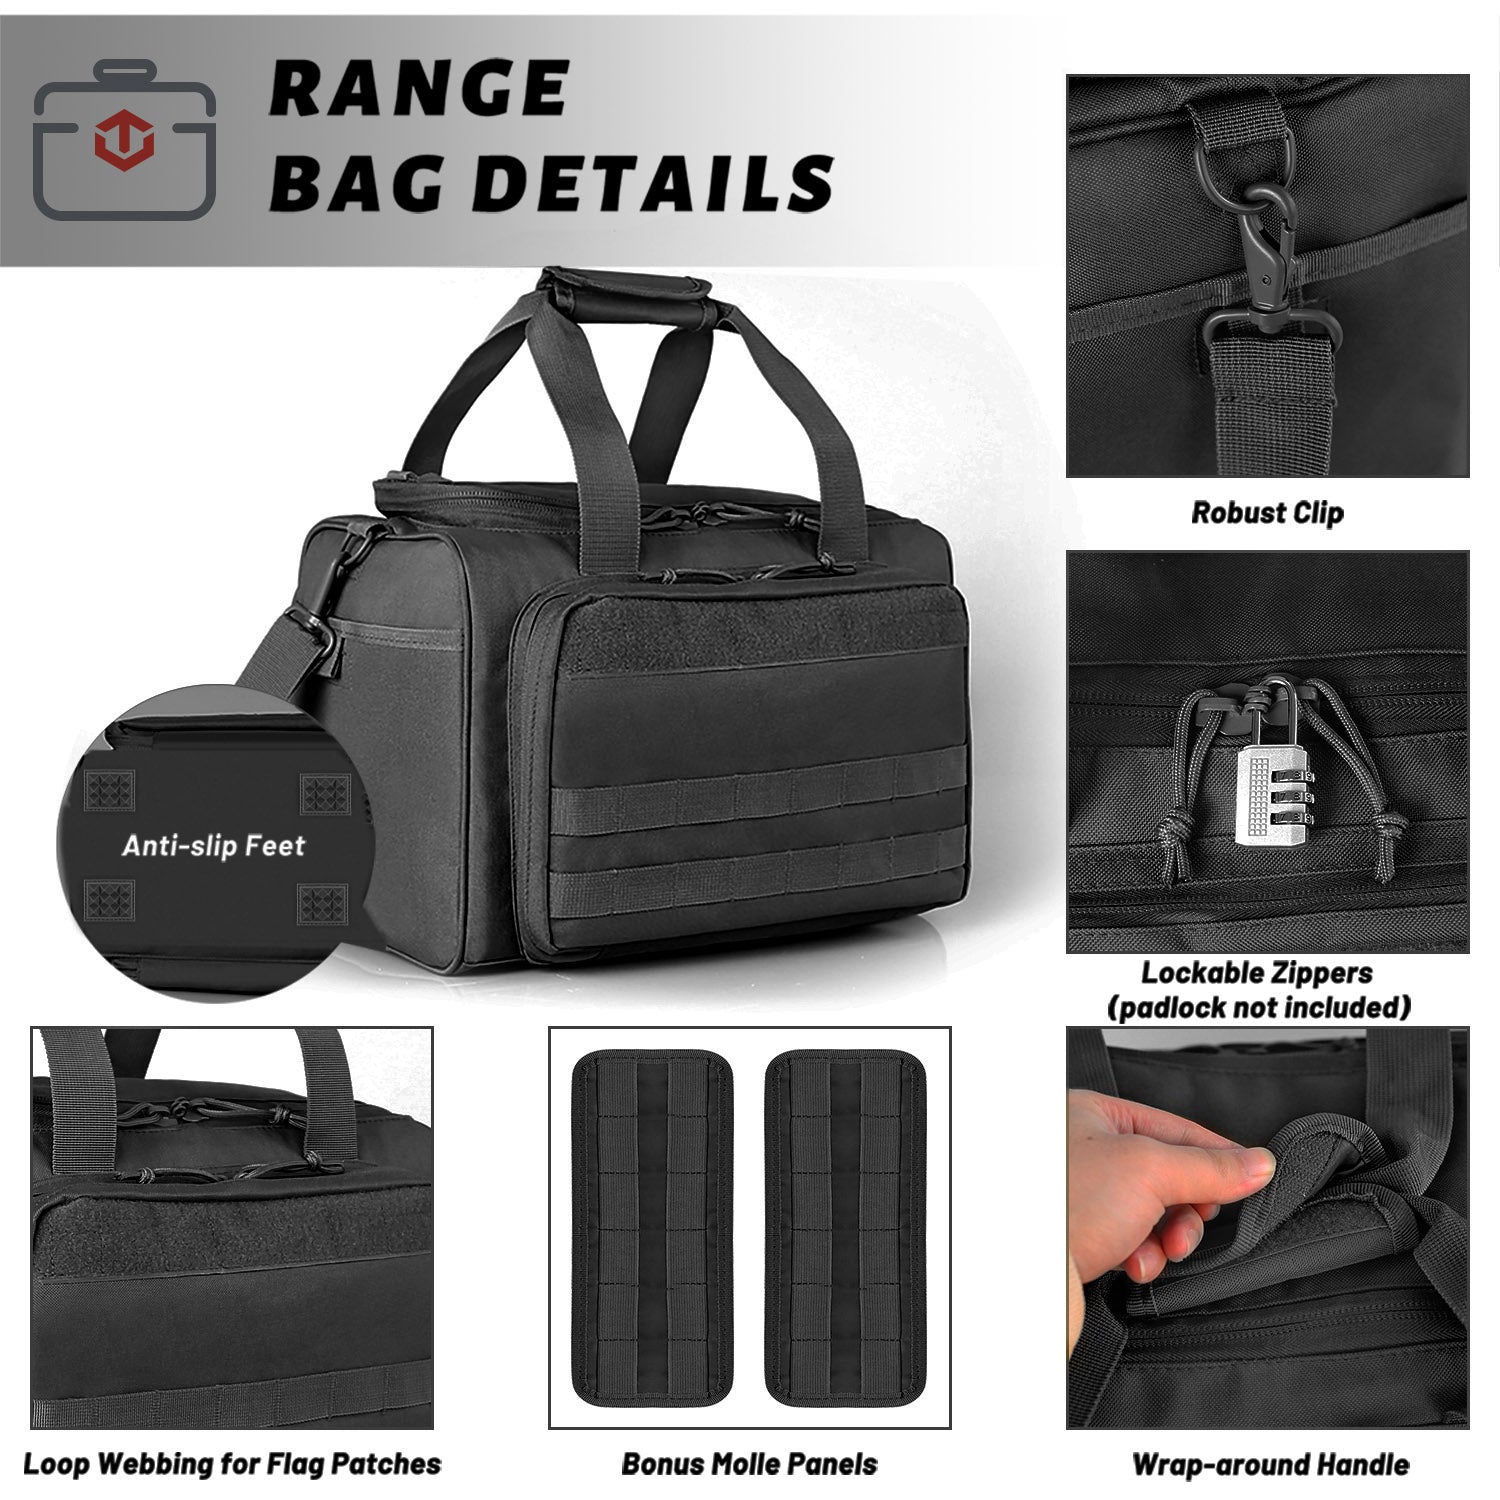 WINCENT Tactical Gun Range Bag for Handguns and Ammo